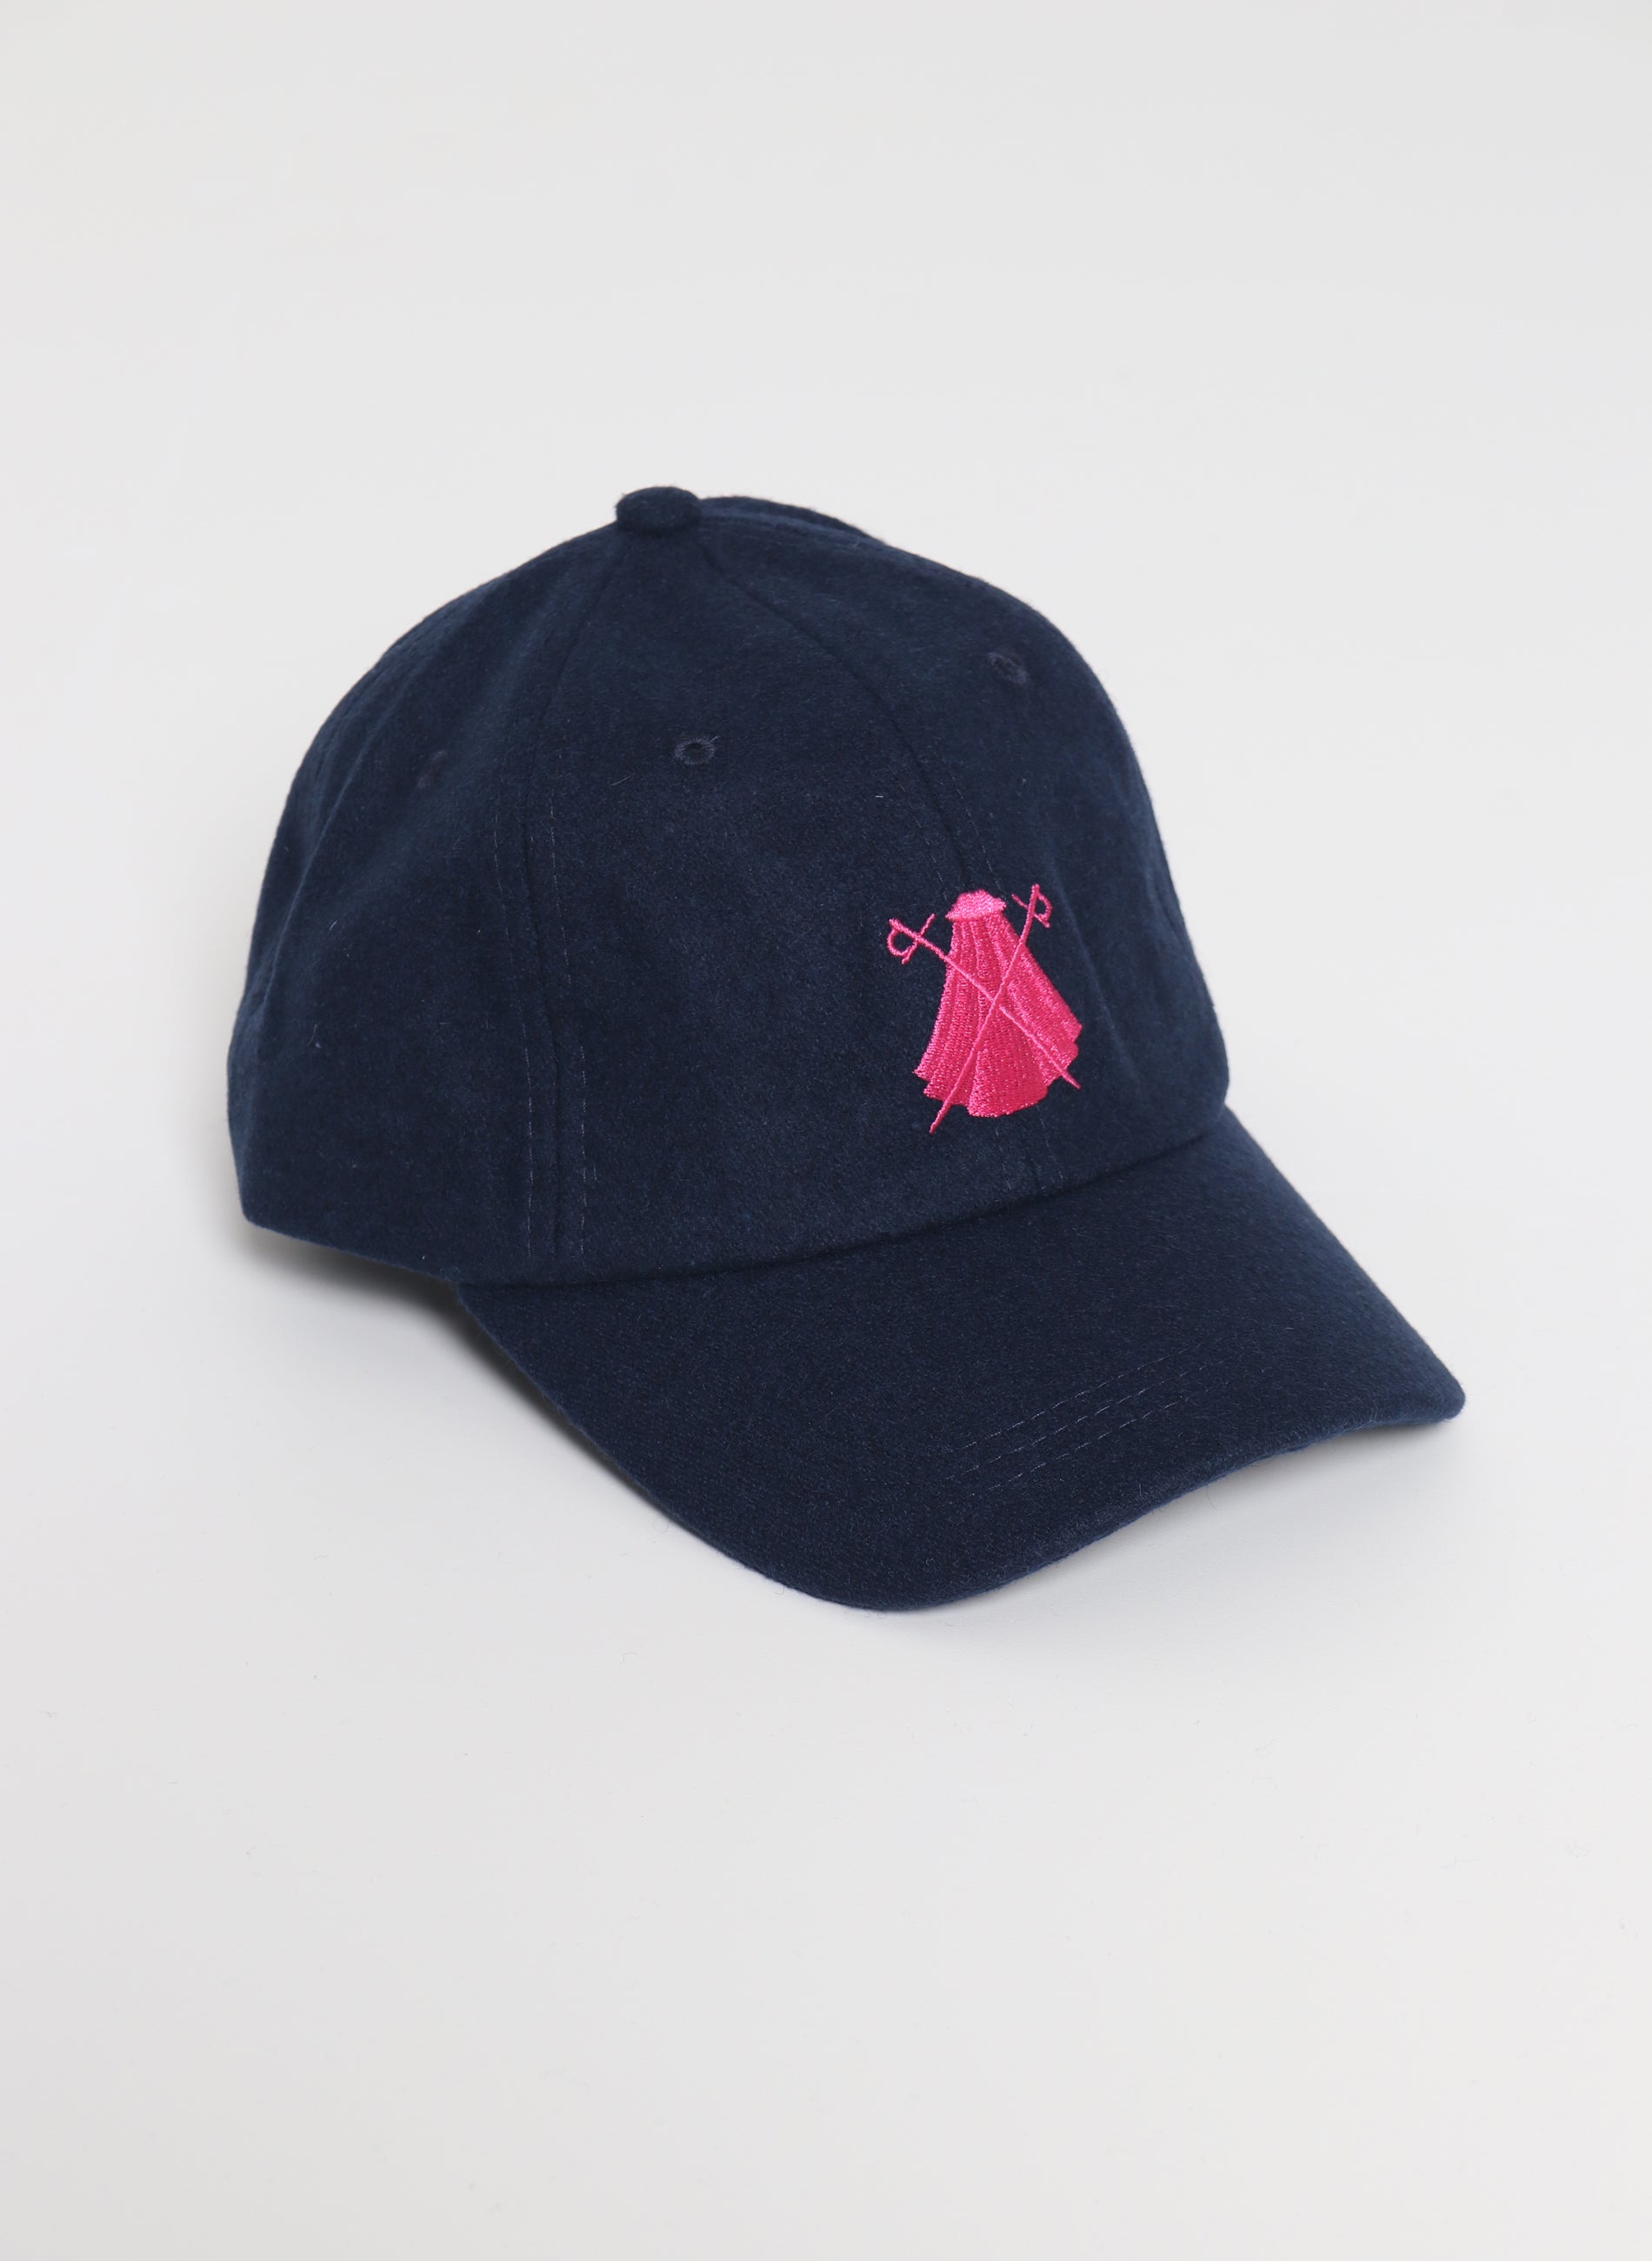 Casquette en laine bleu marine Casquette à logo rose